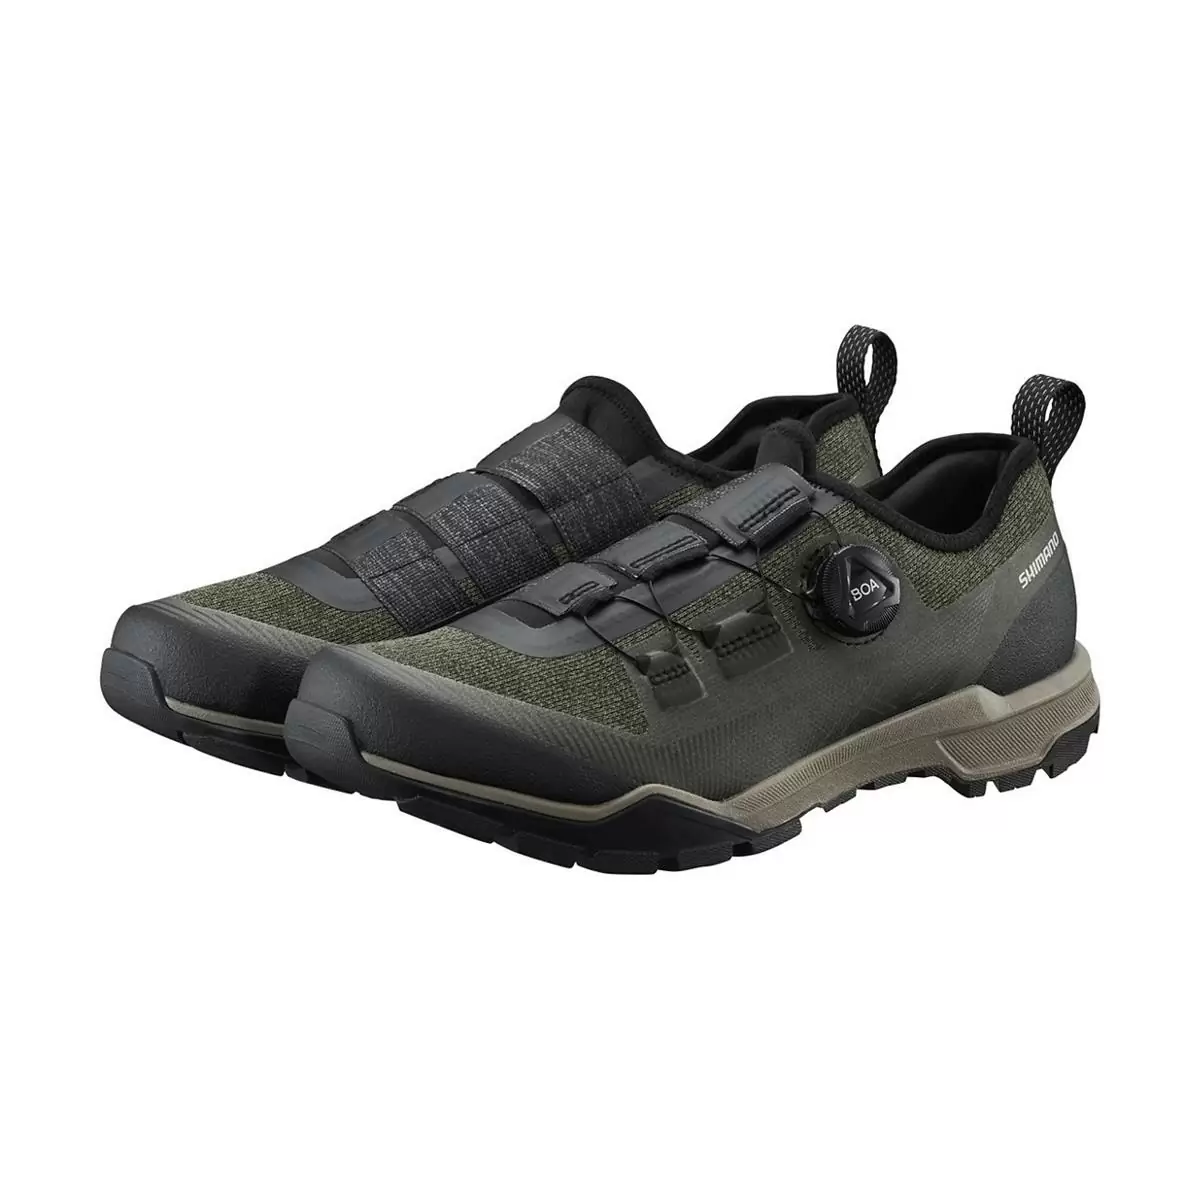 Trekking / MTB Shoes SH-EX700 Green Size 46 #4